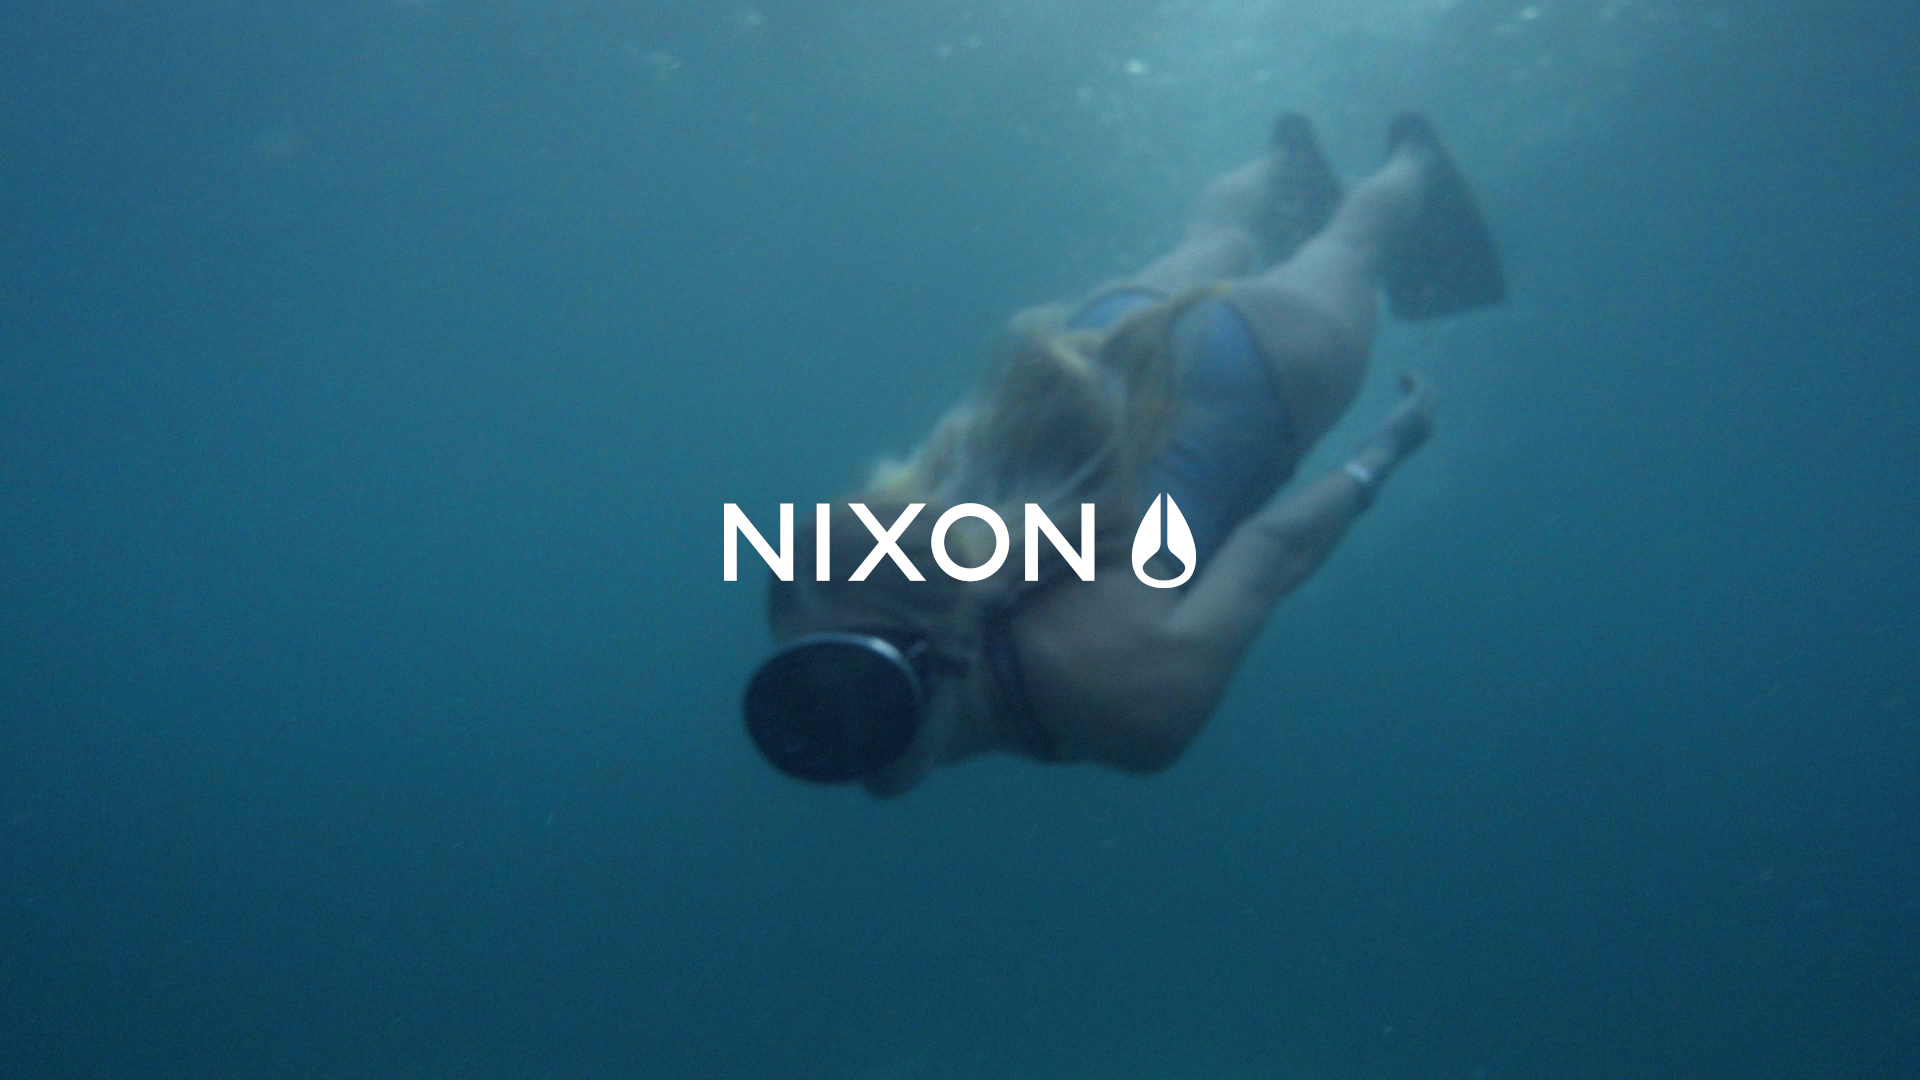 A woman snorkling for Nixon by Voda films